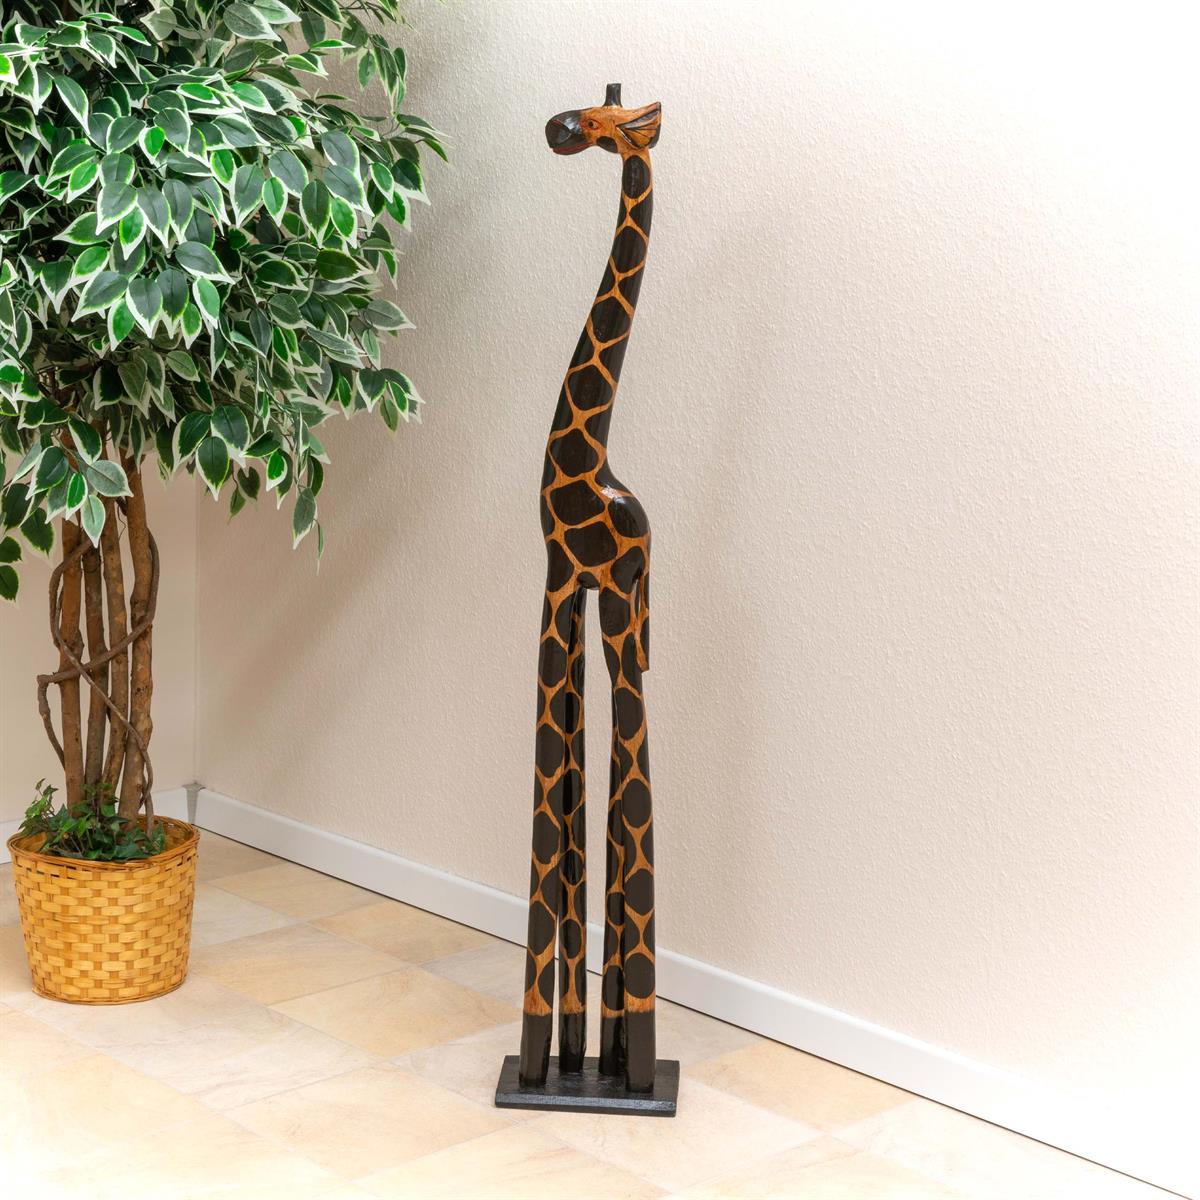 60cm Holz Giraffe Holzgiraffe Afrika Deko Handarbeit Fair Trade Dunkel Armband 